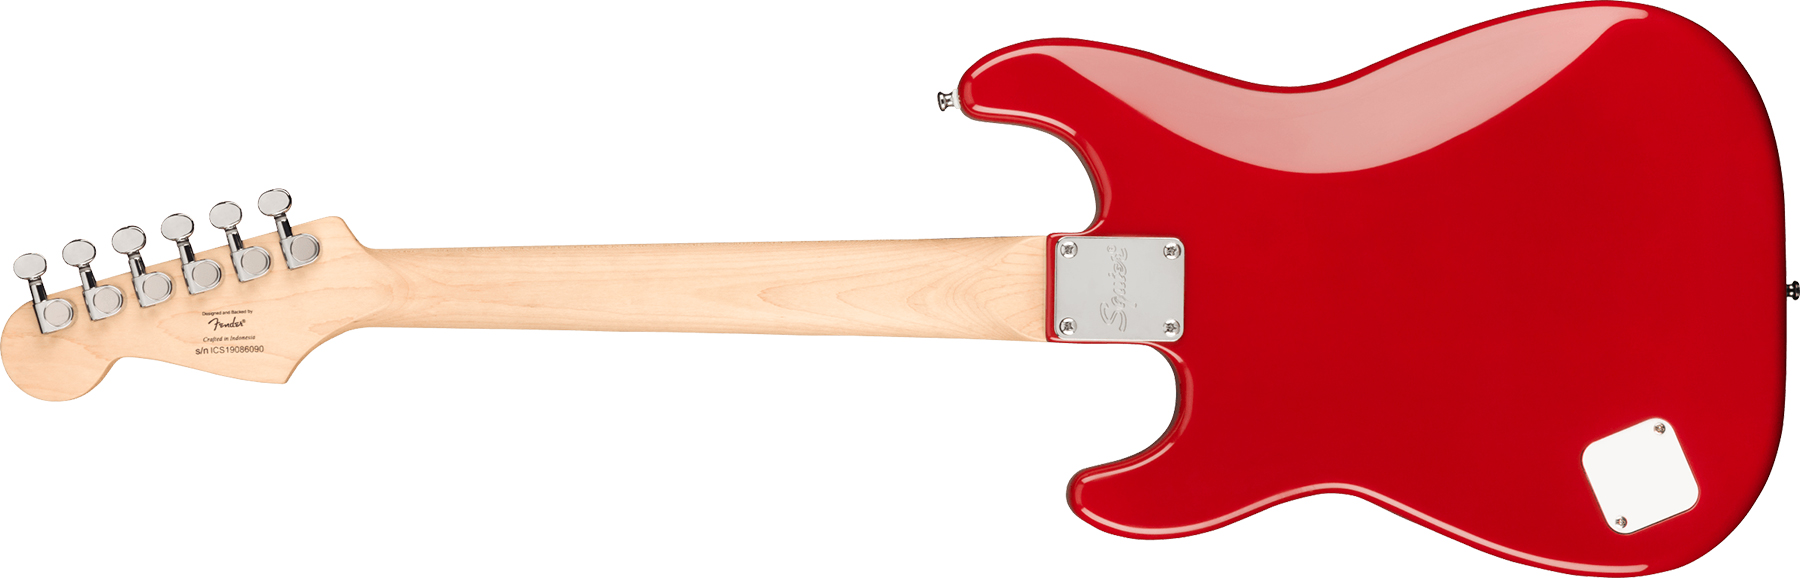 Squier Mini Strat V2 Ht Sss Lau - Dakota Red - Str shape electric guitar - Variation 1